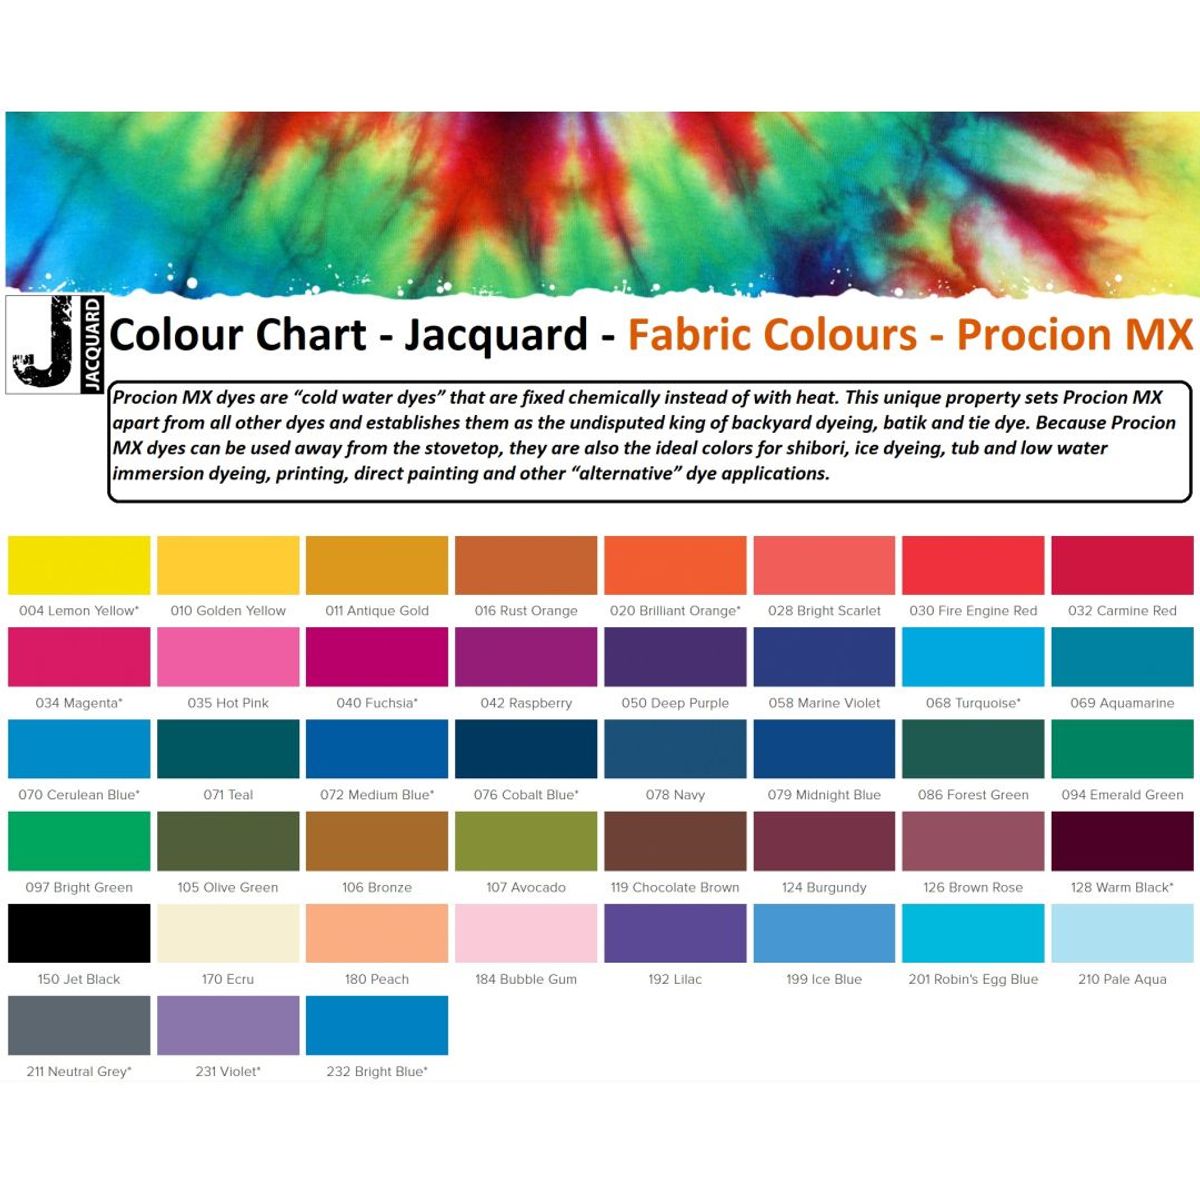 Jacquard - Procion MX Dye - Fabric Textile - Bright Scarlet 028